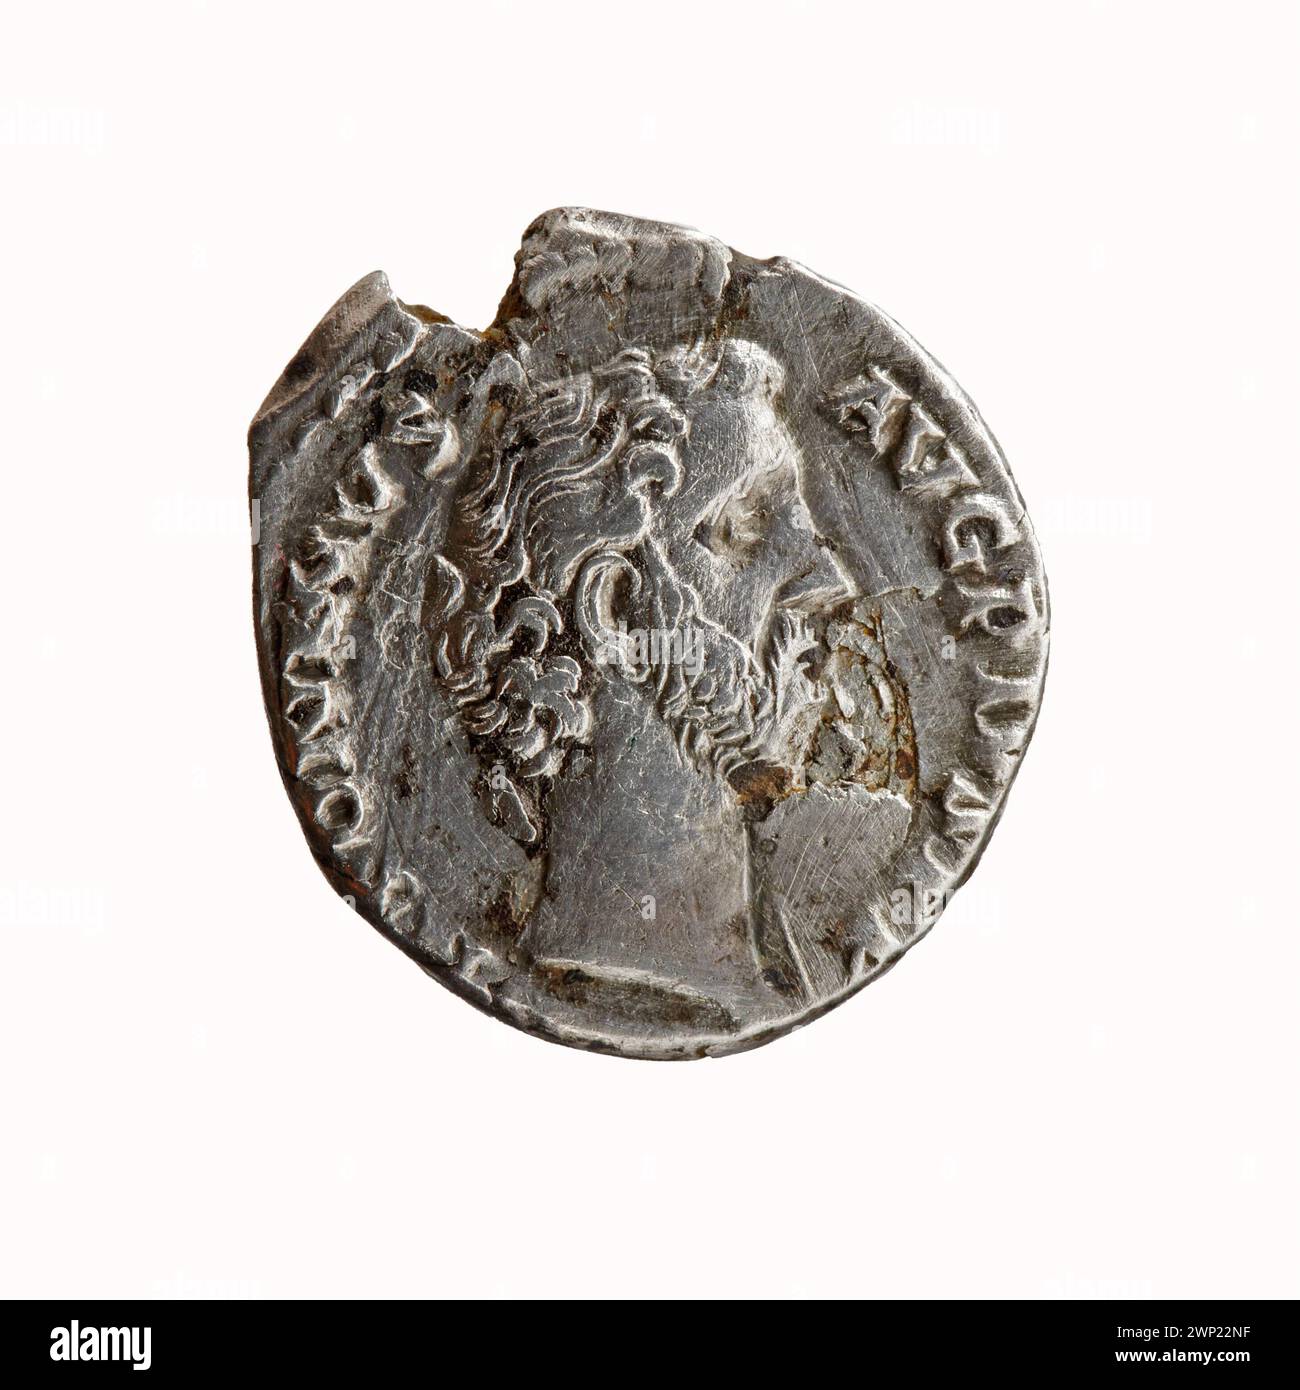 Denario; Antonino Pio (86-161; imperatore romano 138-161); 139 (139-00-00-139-00-00-00); Foto Stock